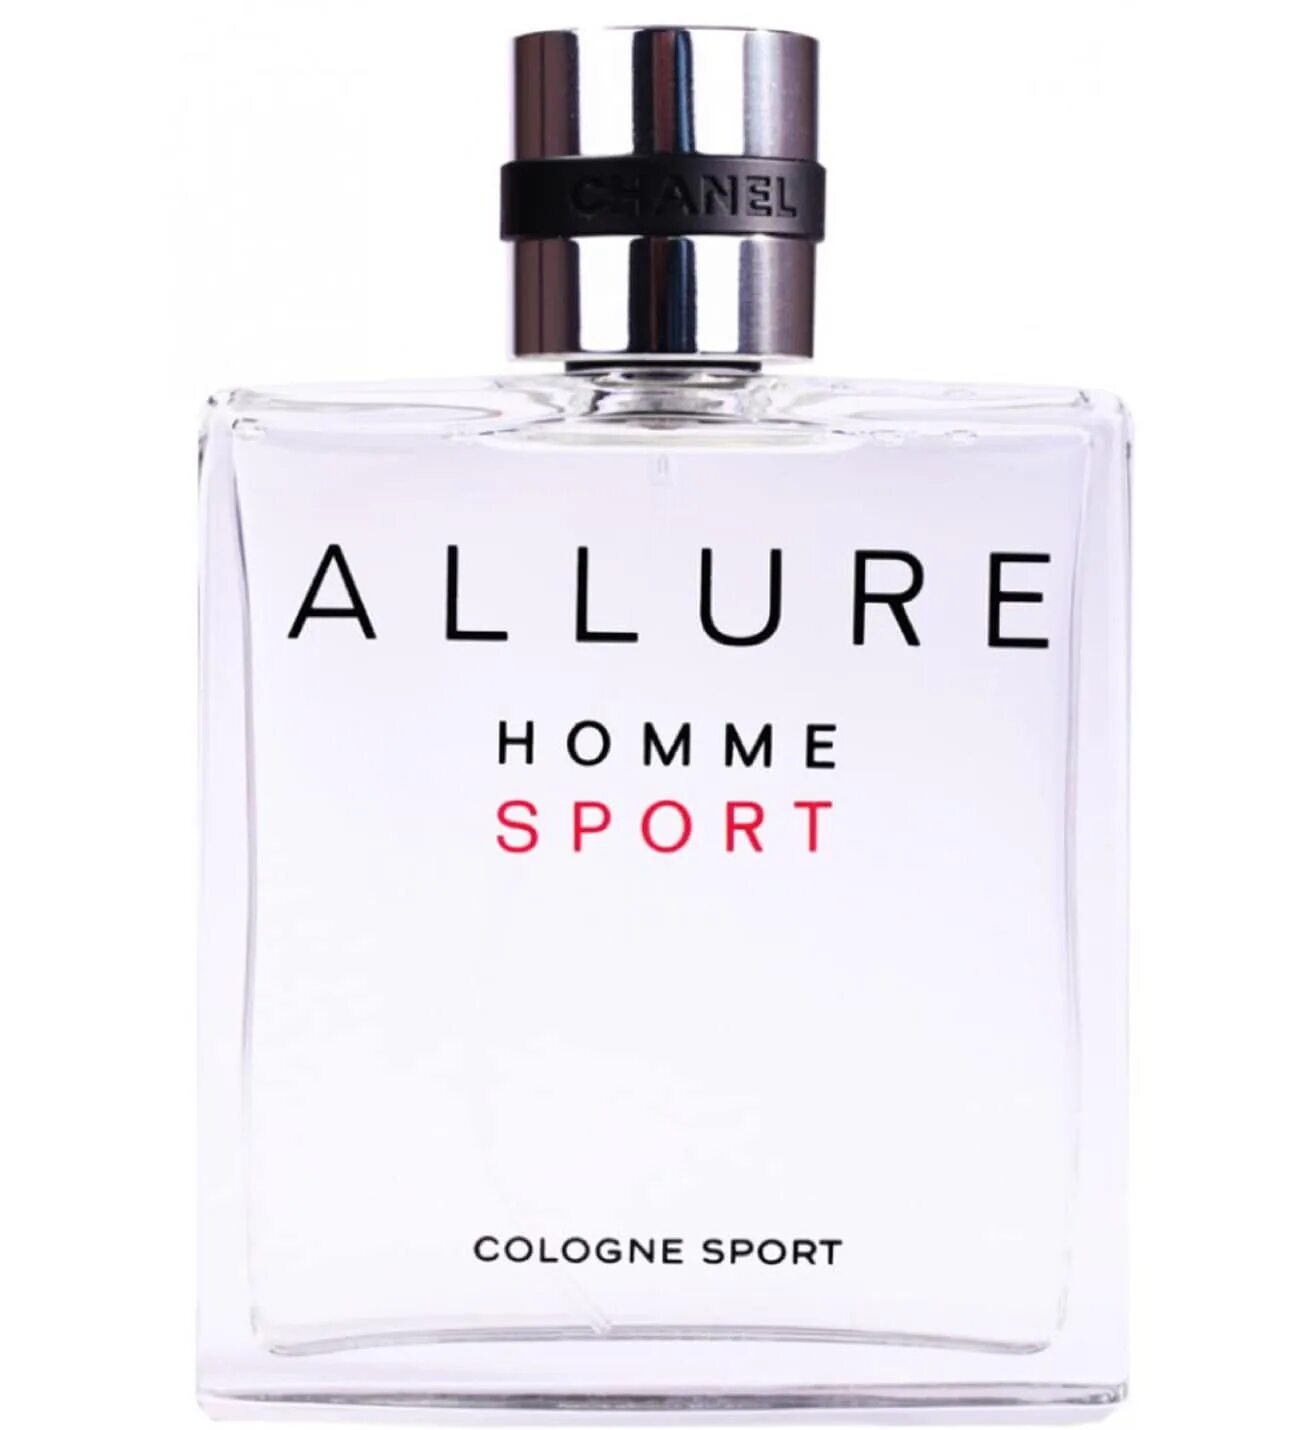 Chanel Allure homme Sport Cologne. Chanel homme Sport Cologne. Chanel Allure homme Sport. Шанель хом спорт мужские. Chanel cologne sport